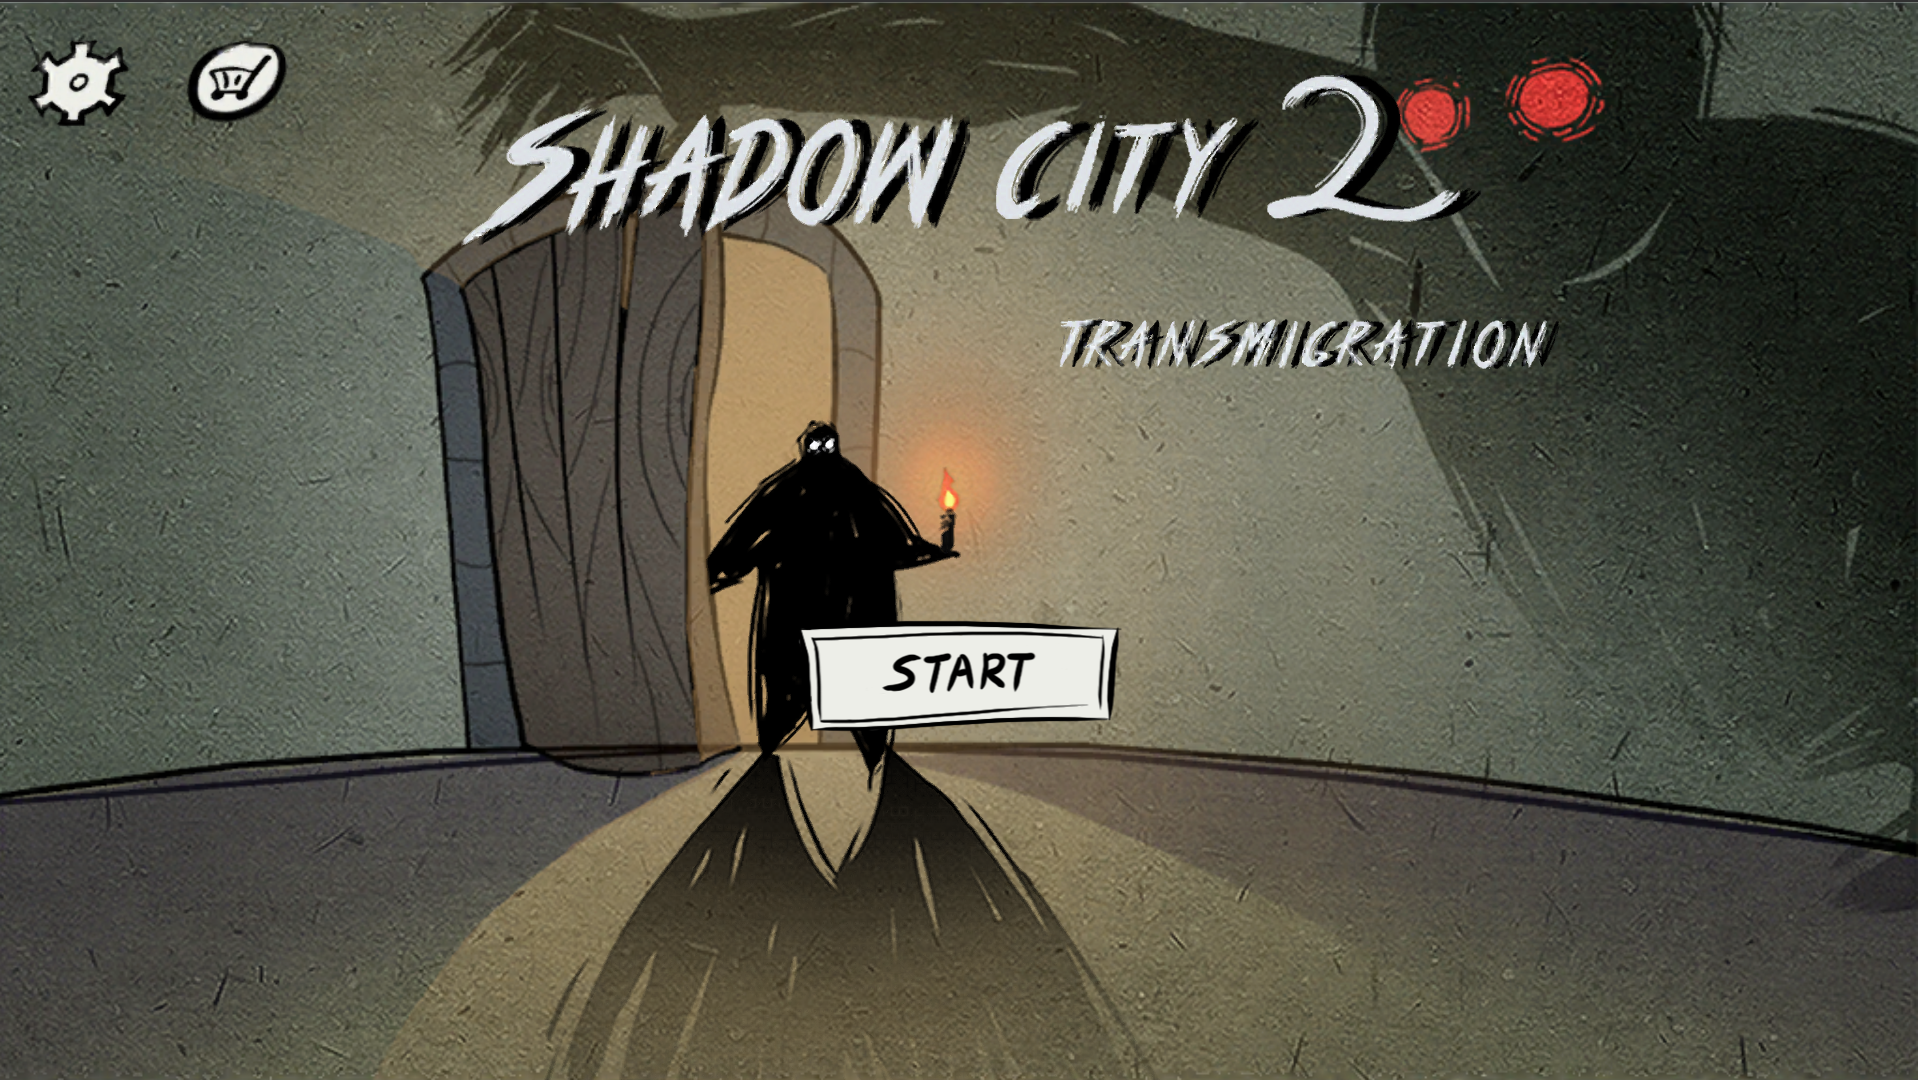 Screenshot 1 of Shadow city2 